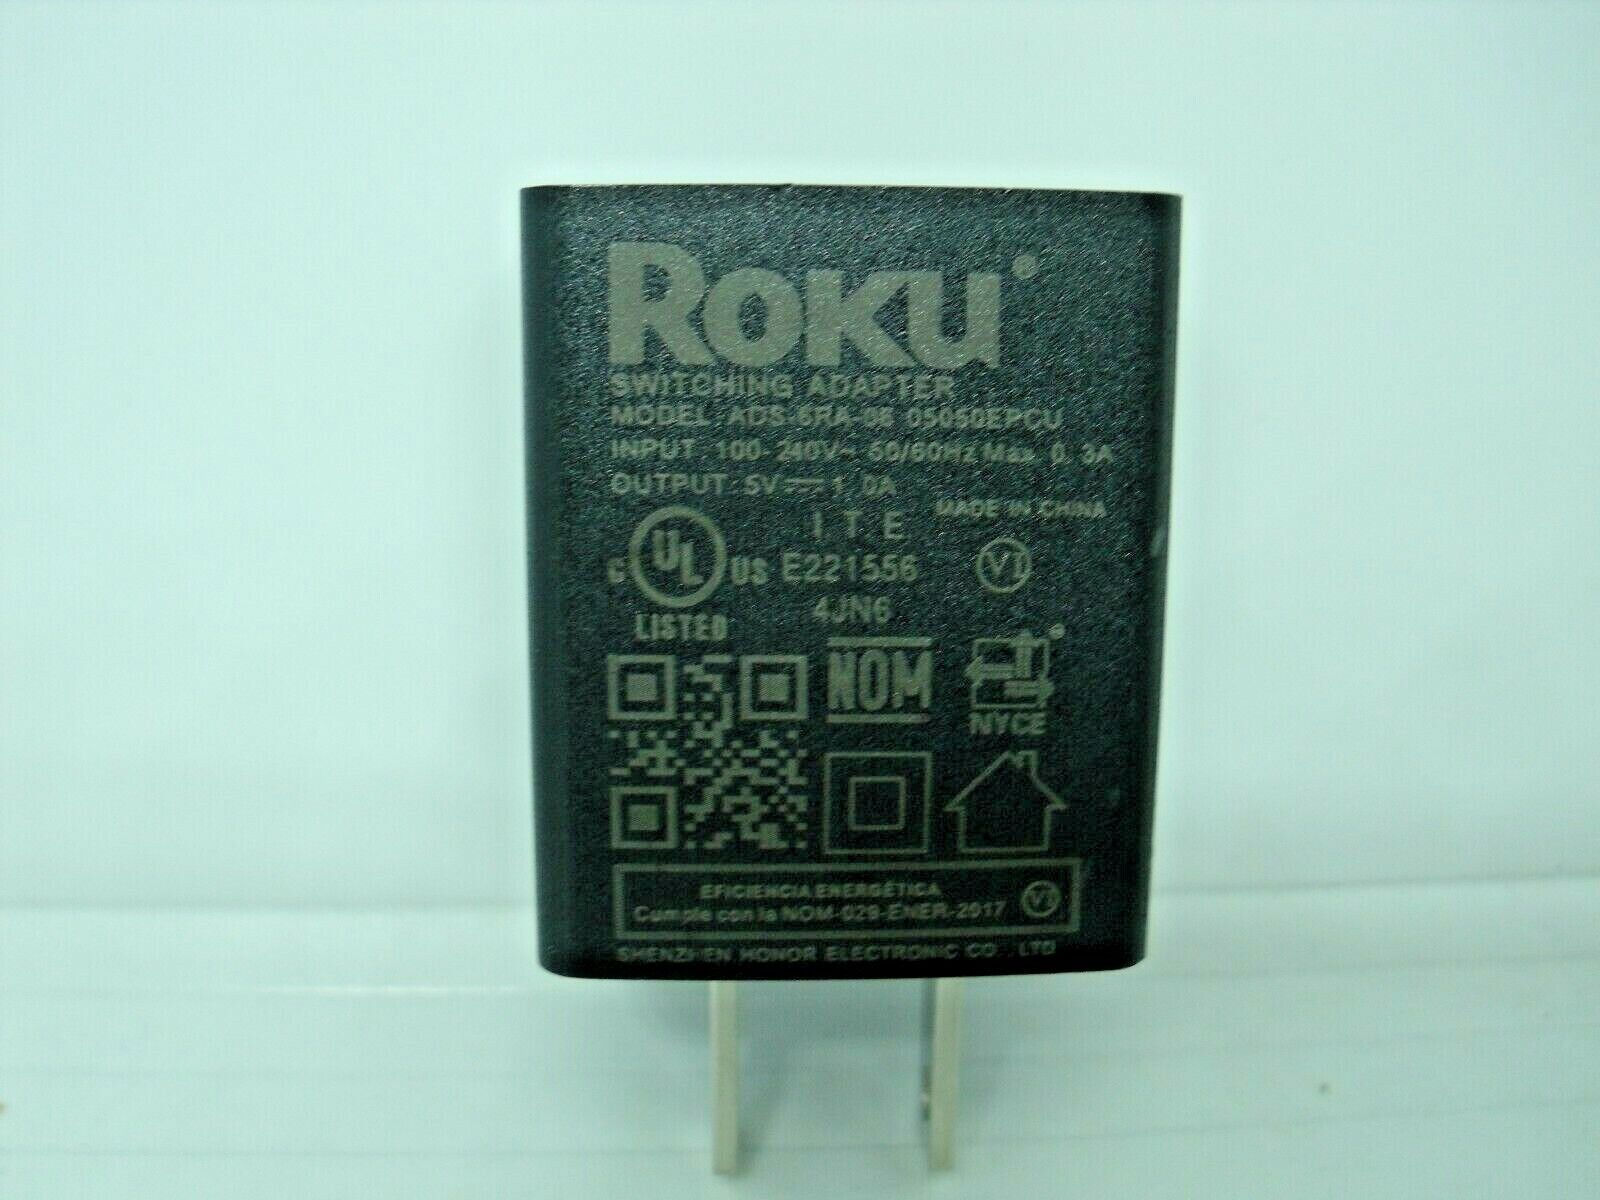 AC DC Power Adapter Roku 5.0V 1.0A (no Cable) ADS-6RA-06 5 PACK USA SELLER model number:ADS-6RA-06 5 input:100-240v 50-